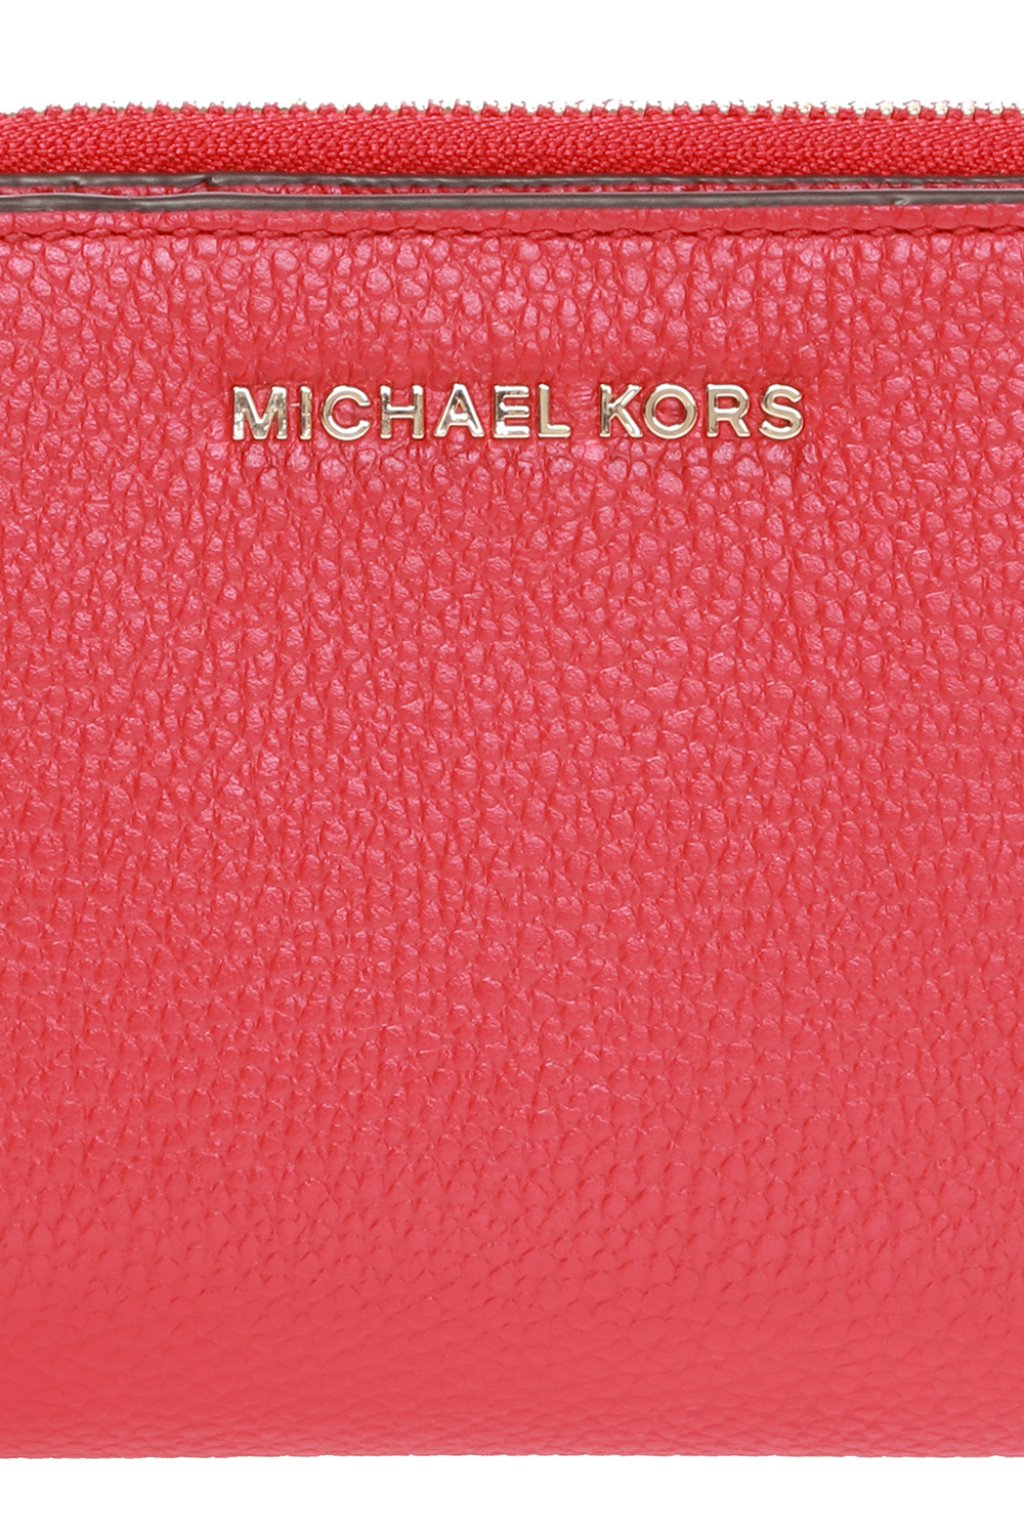 Michael Michael Kors Wallet with metal logo | Women's Accessories | Vitkac